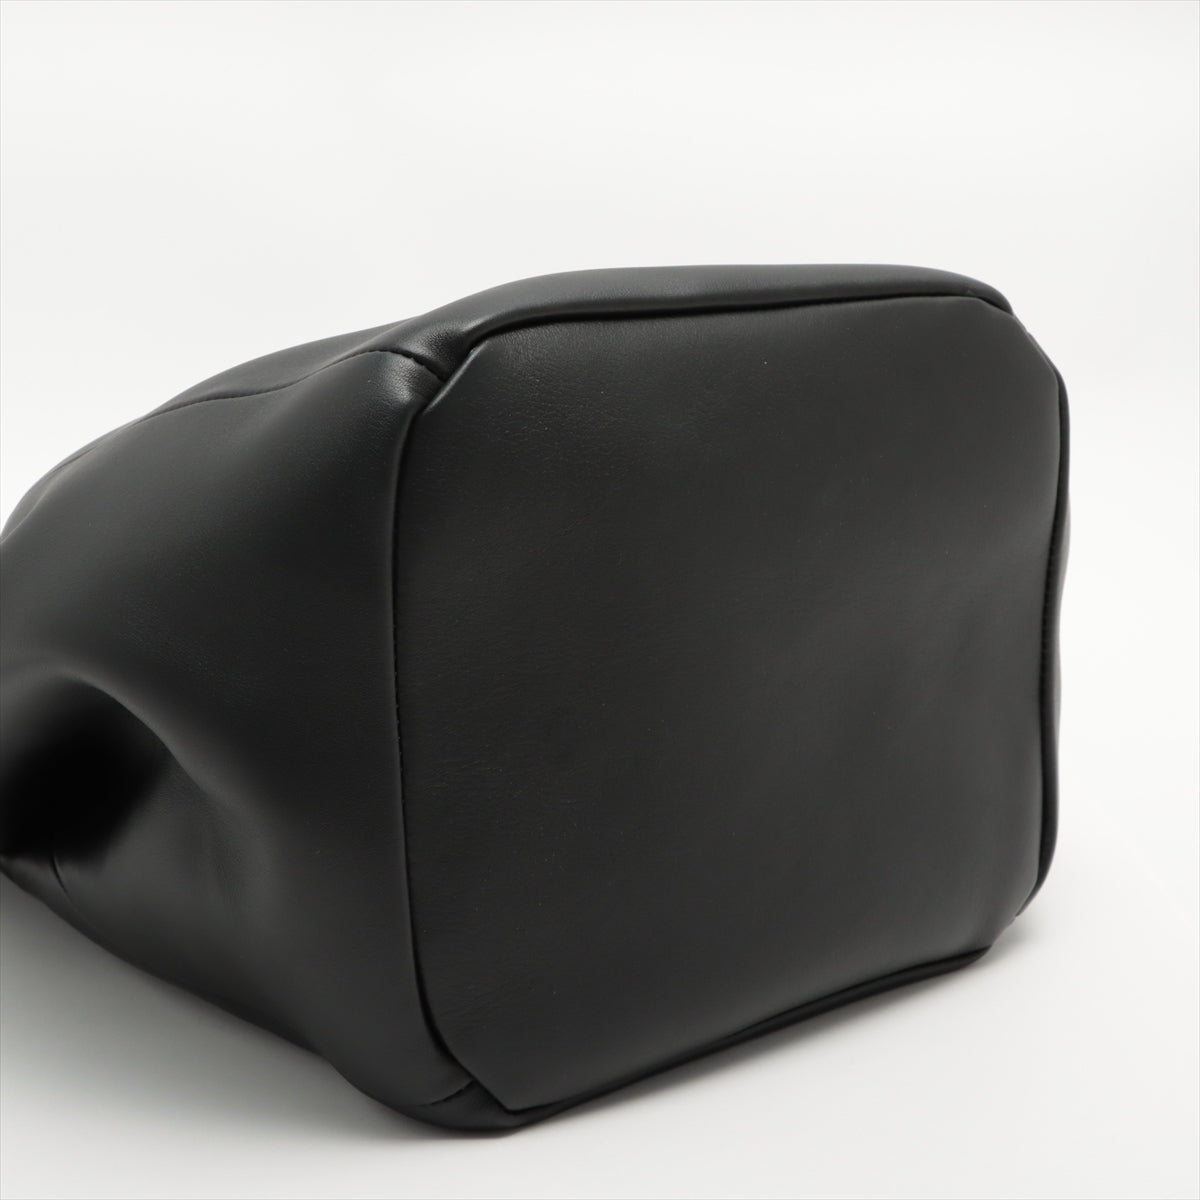 Bottega Veneta Beek Leather Shoulder bag Black